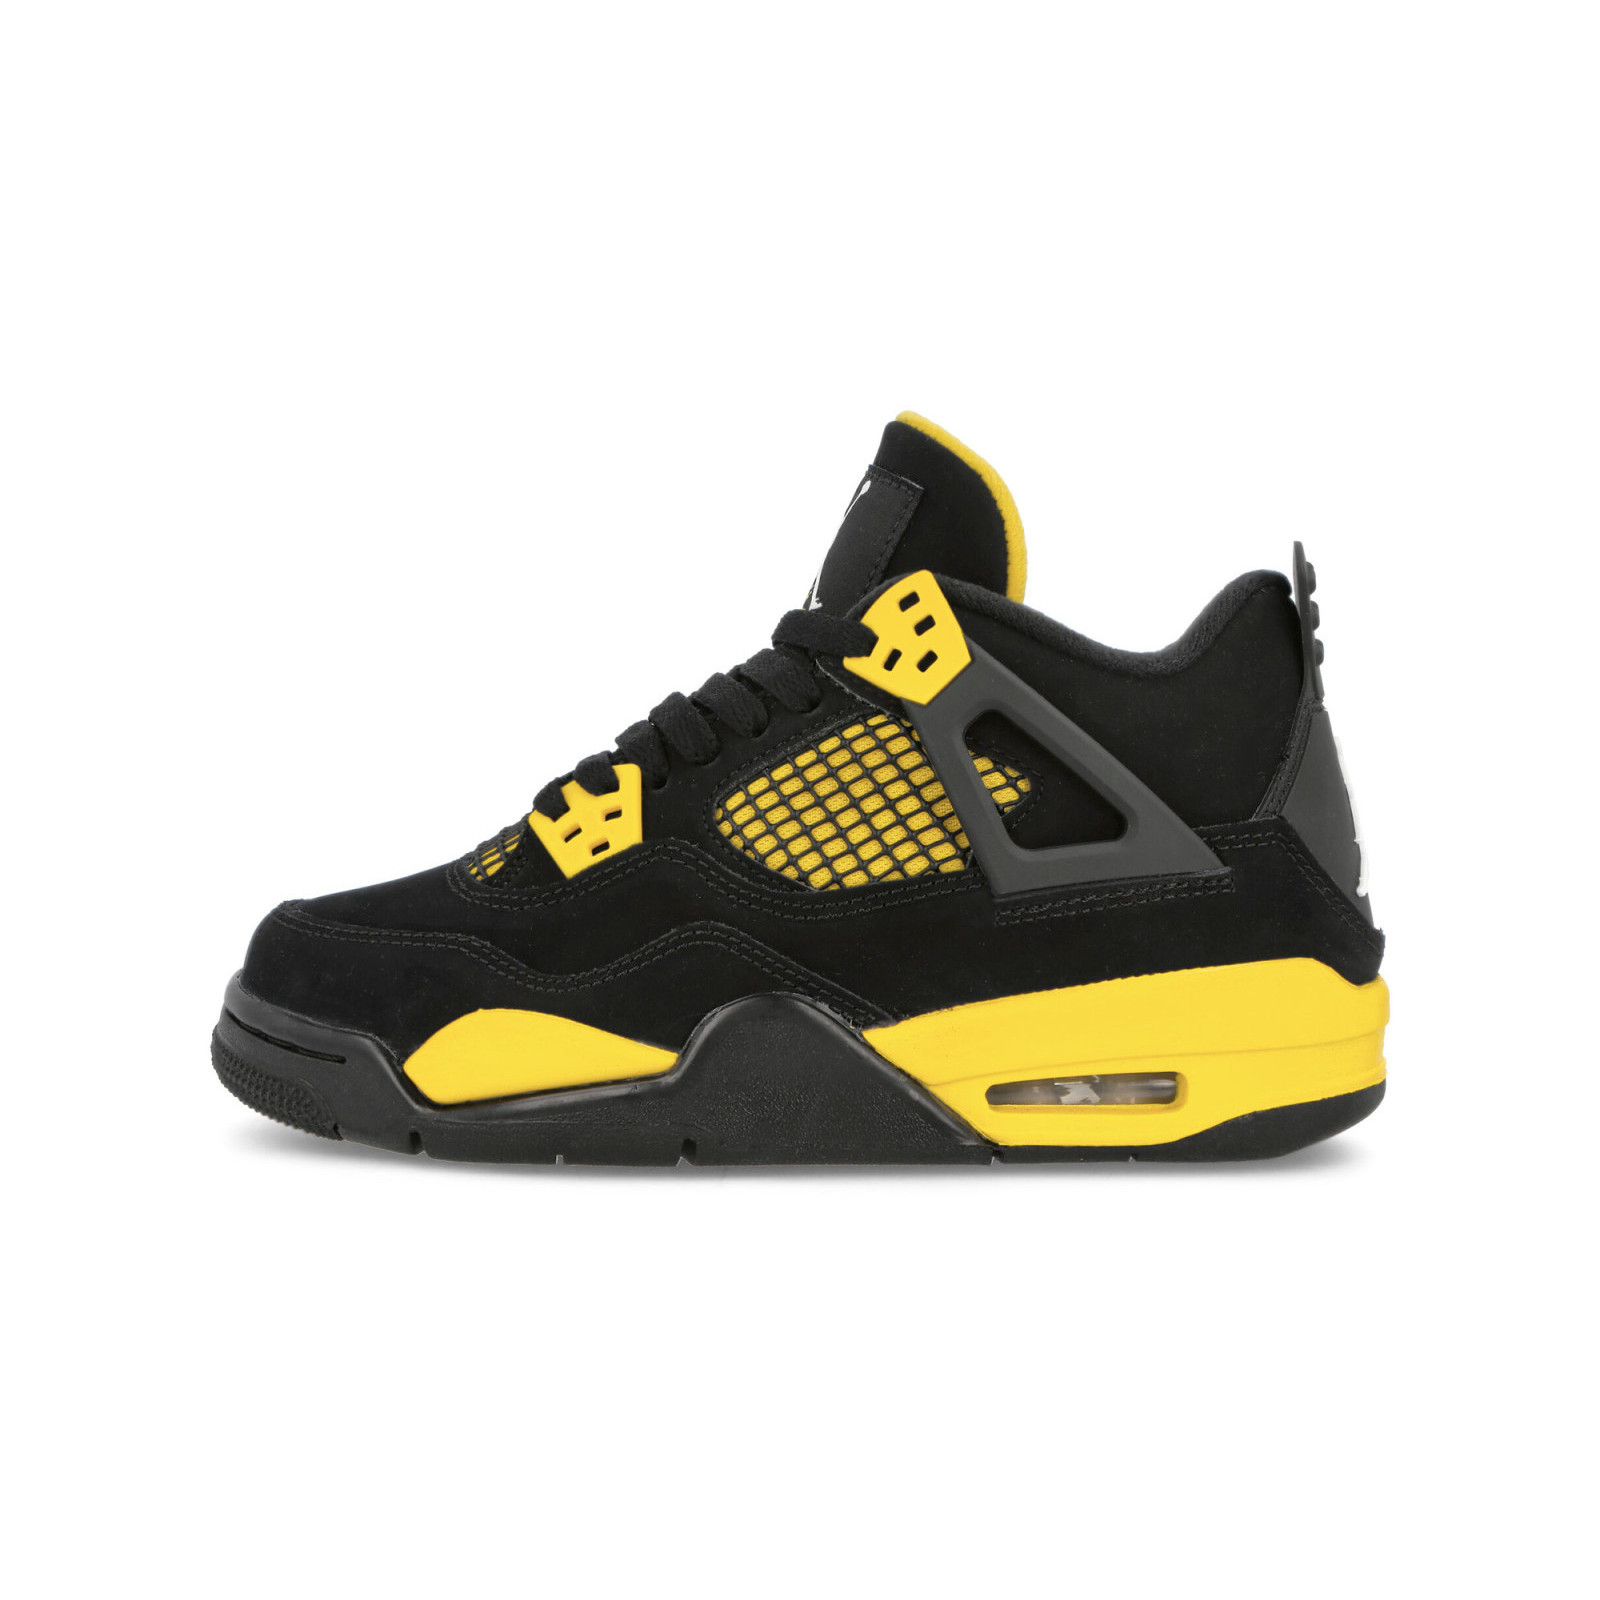 Air Jordan 4 Retro (GS)
« Tour Yellow »